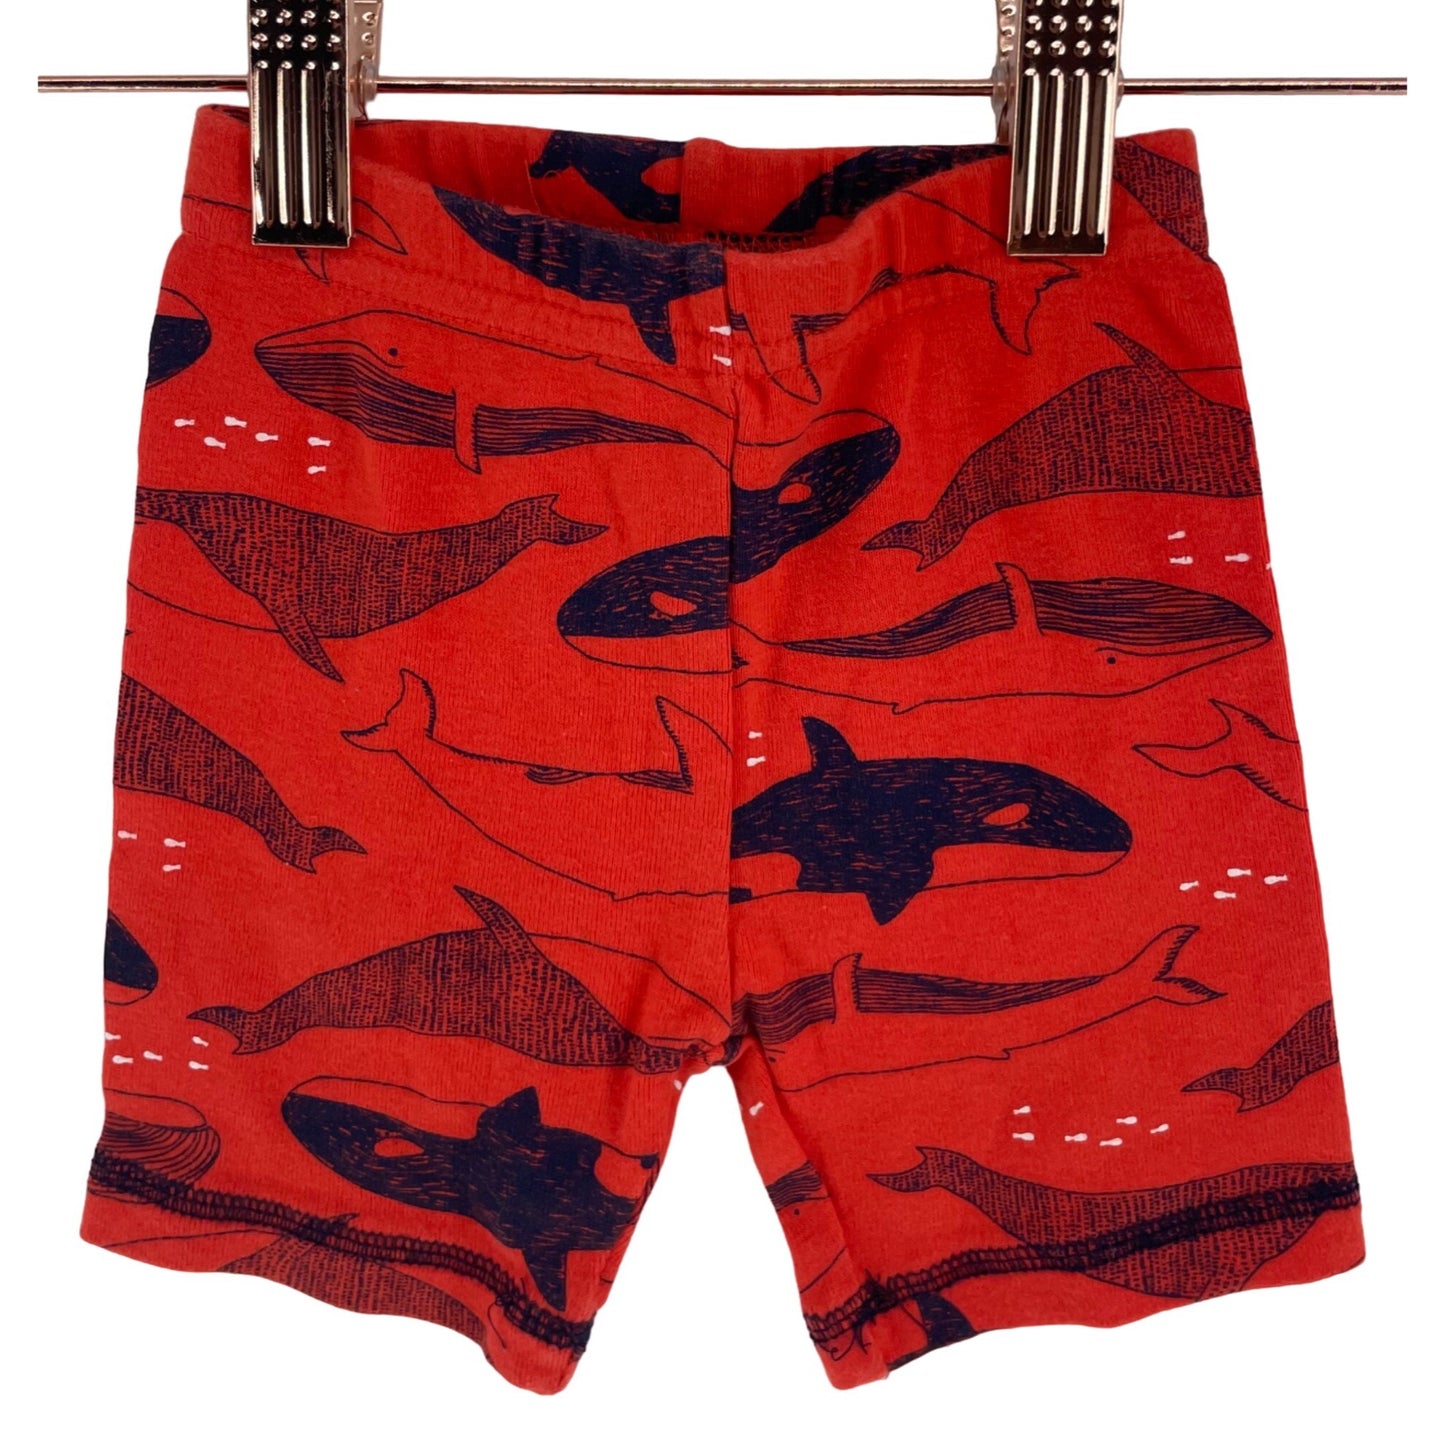 Carter's Boy's Baby Size 12M Orange/Navy Blue Whale Print Stretchy Shorts